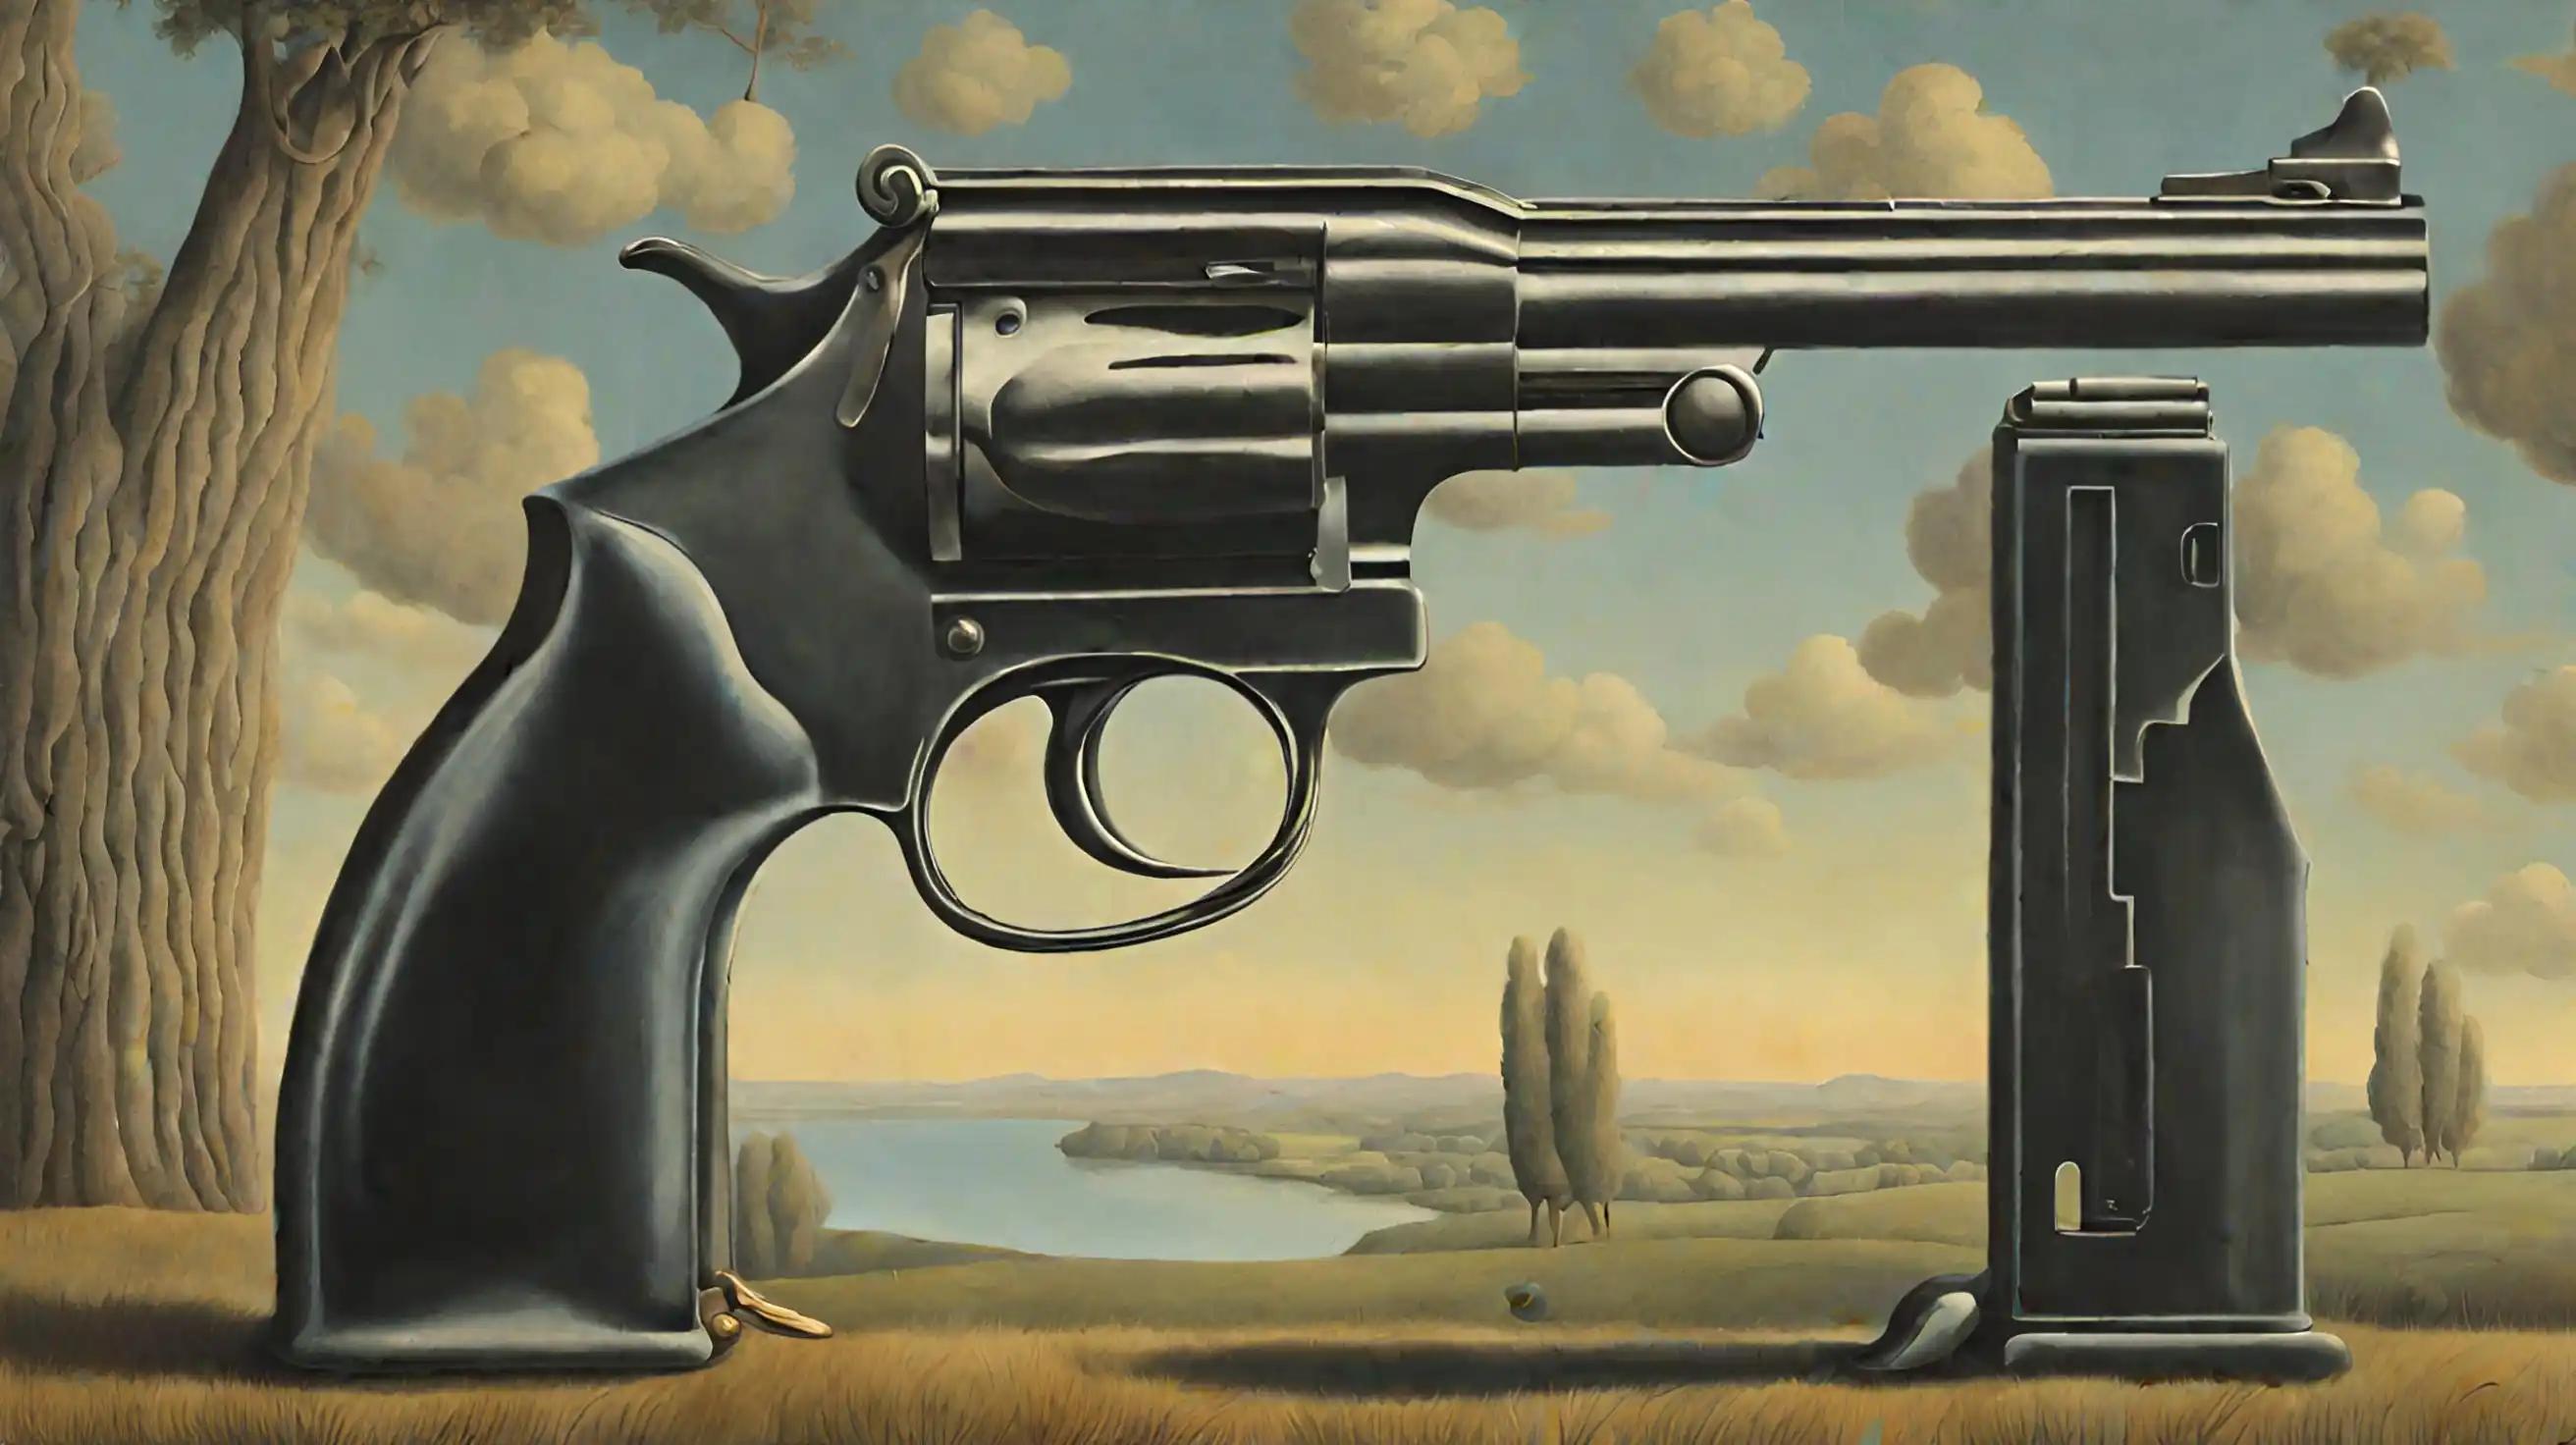 Dream Interpretation and Meaning of Gun in Dreams